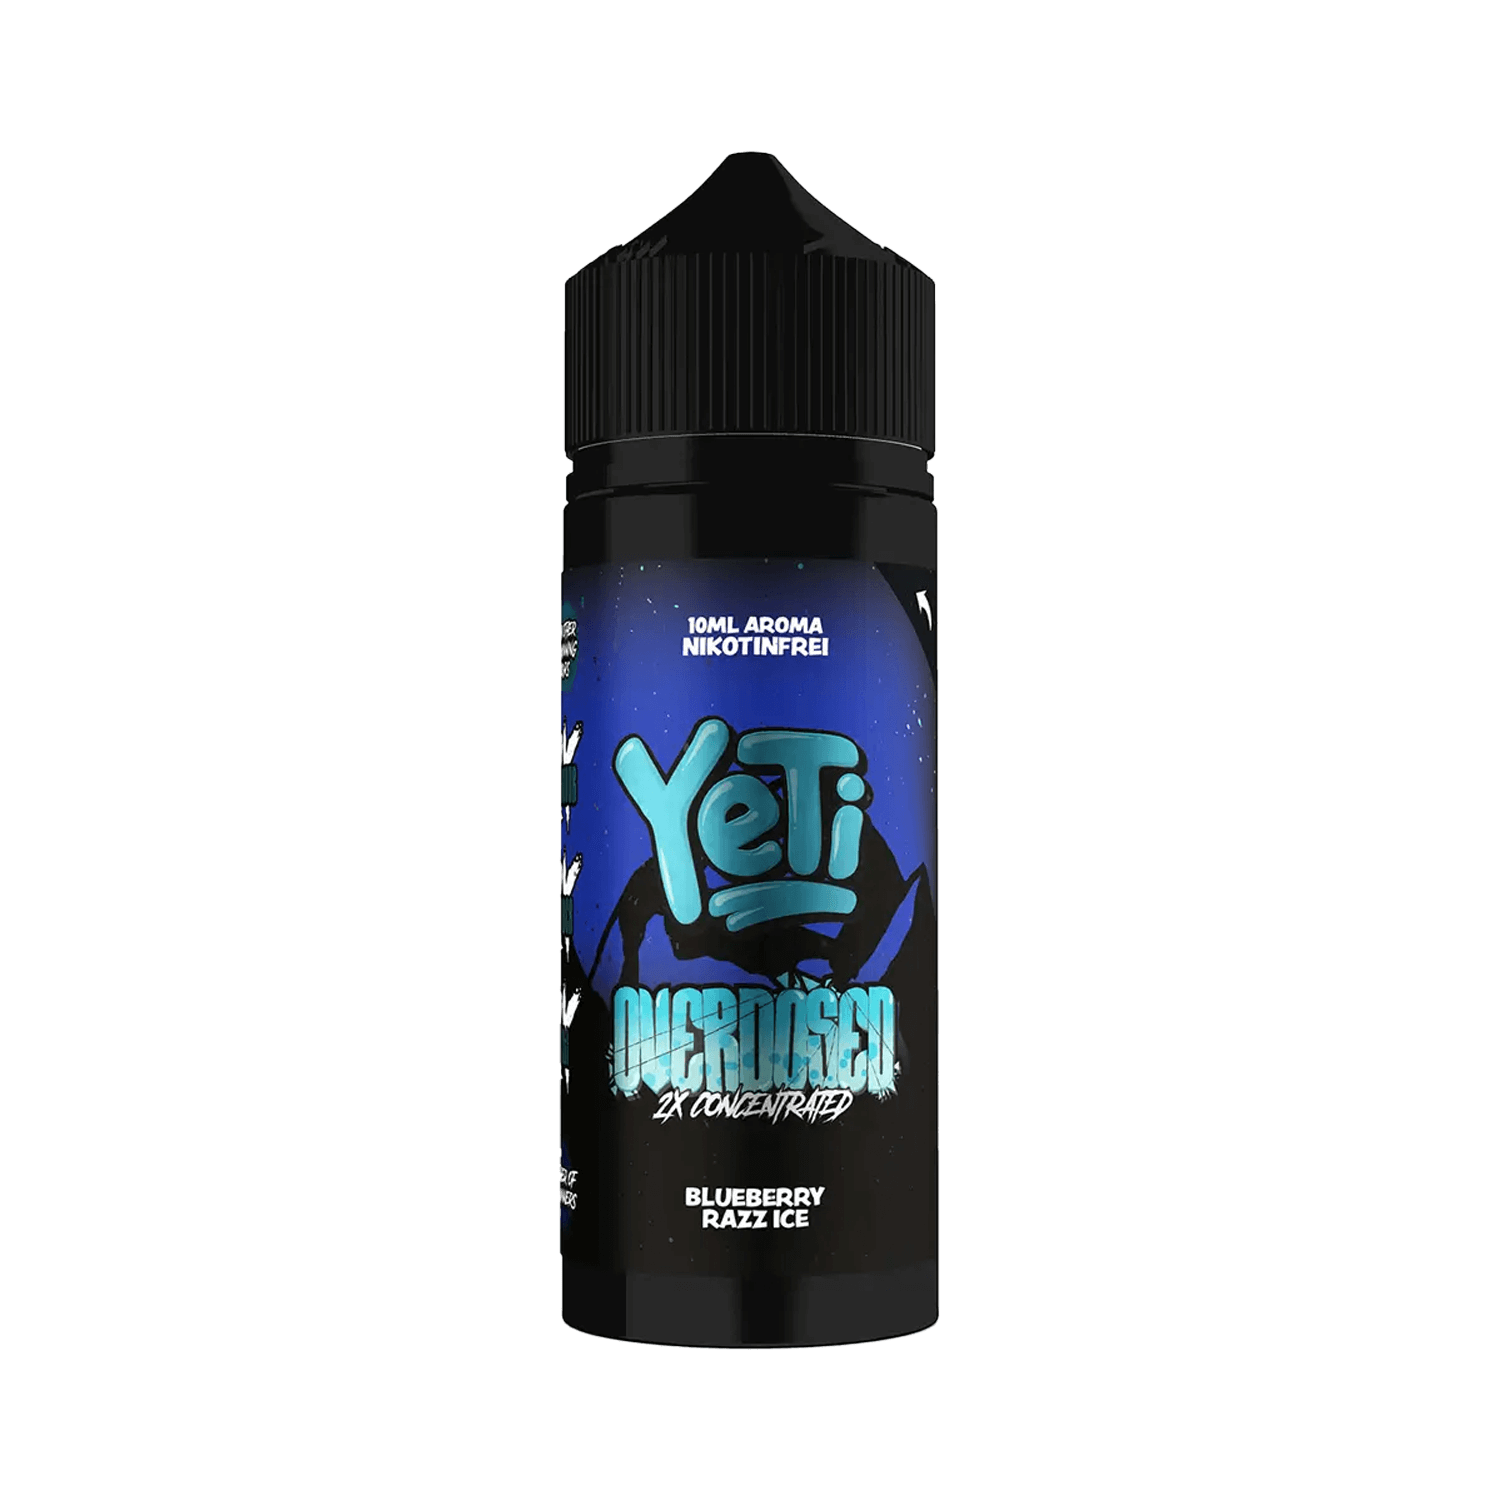 Yeti - Overdosed - Blueberry Razz Ice 10 ml Aroma